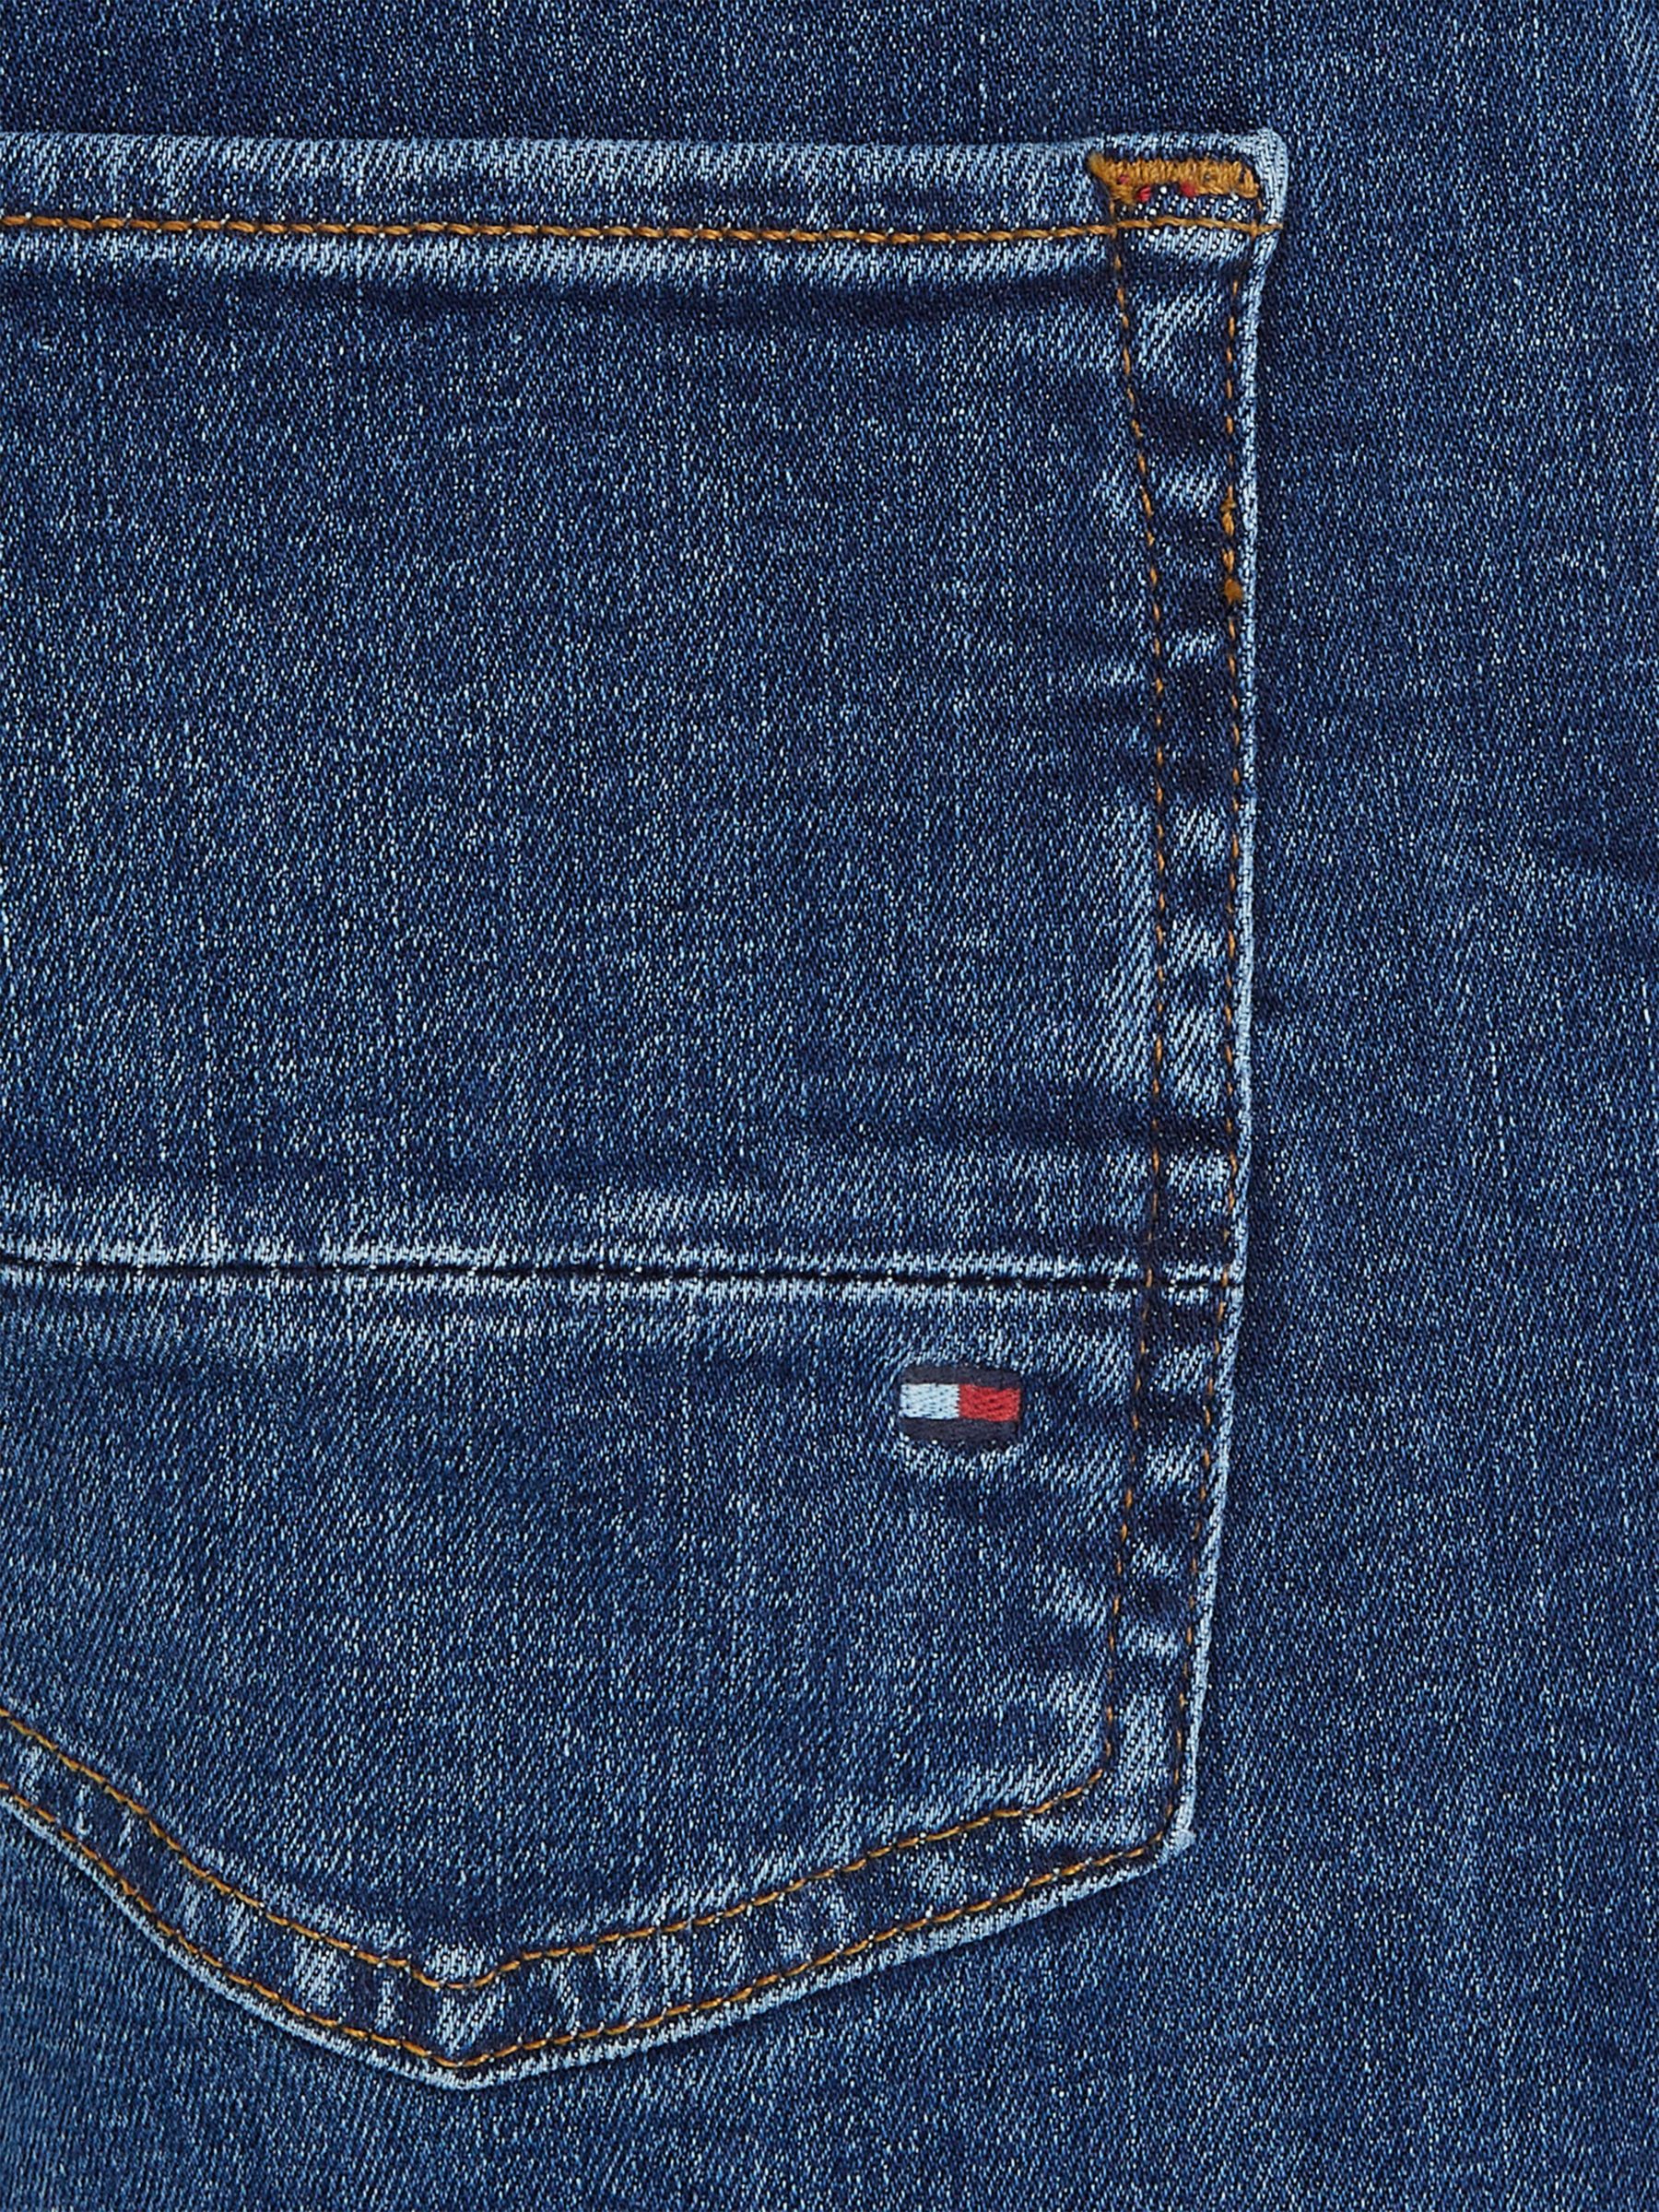 Tommy Hilfiger Core Slim Fit Bleecker Jeans, Oregon Indigo, 30R